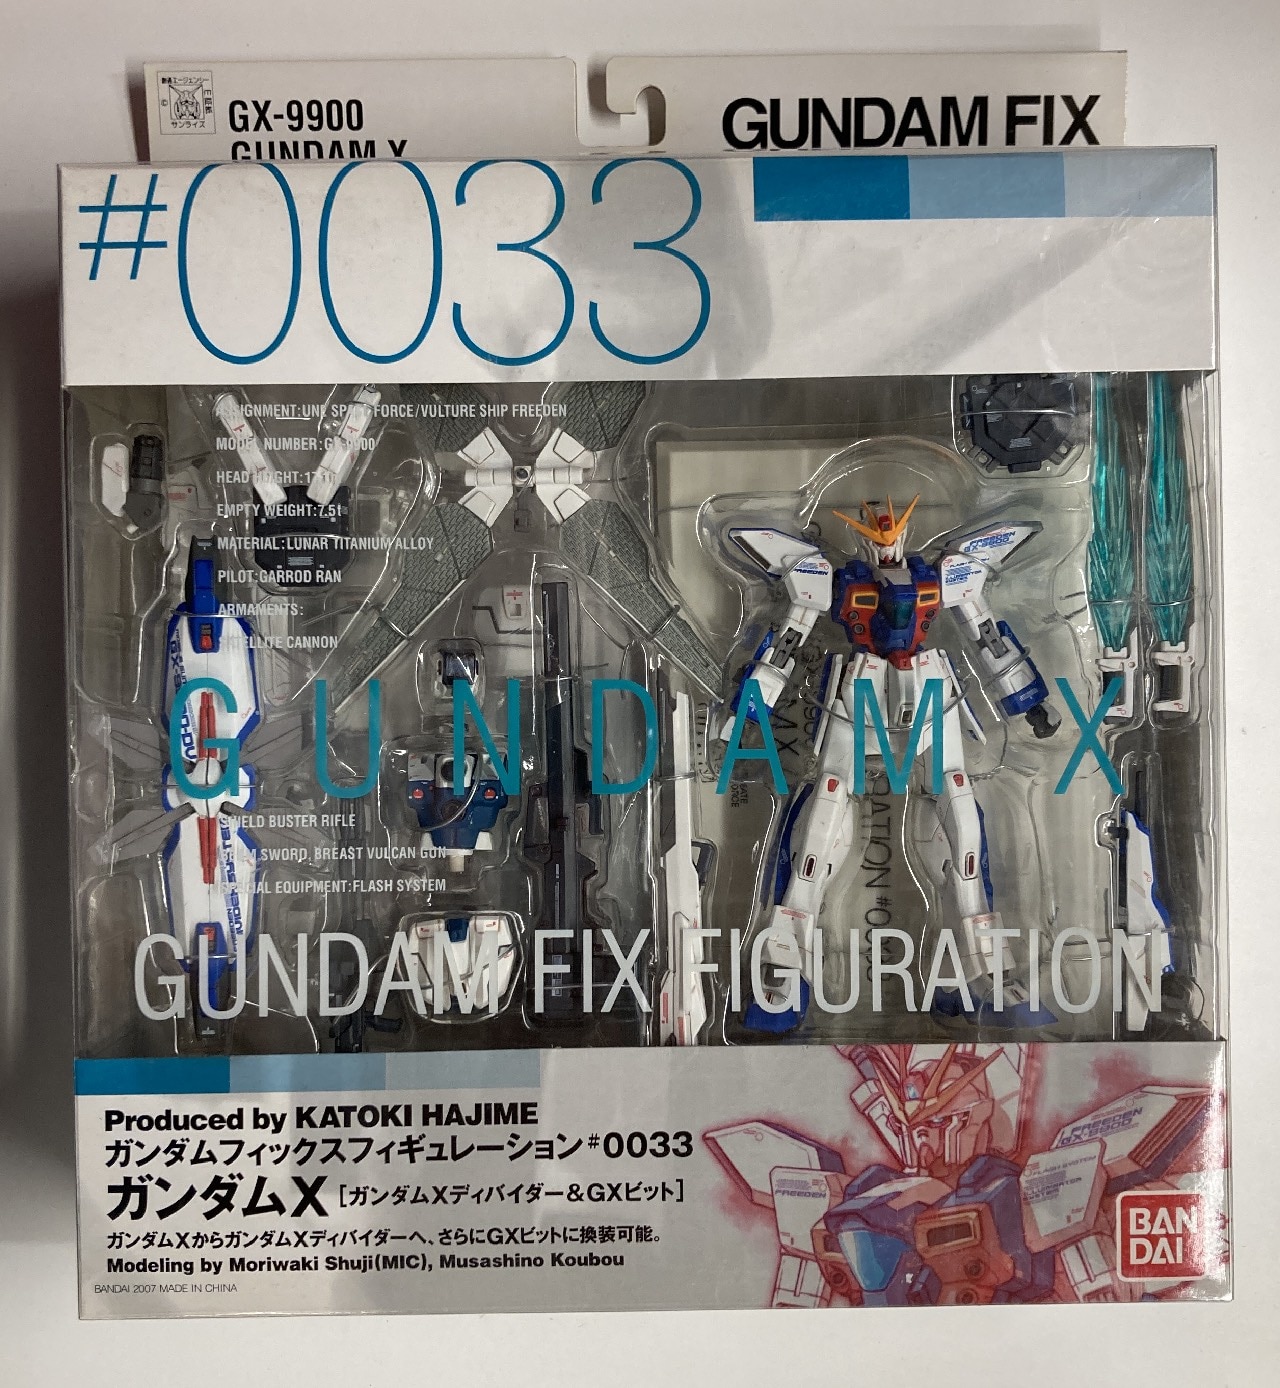 G.F.F #0033 GX-9900 ガンダムX ガンダムXディバイダー＆GXビット GFF 